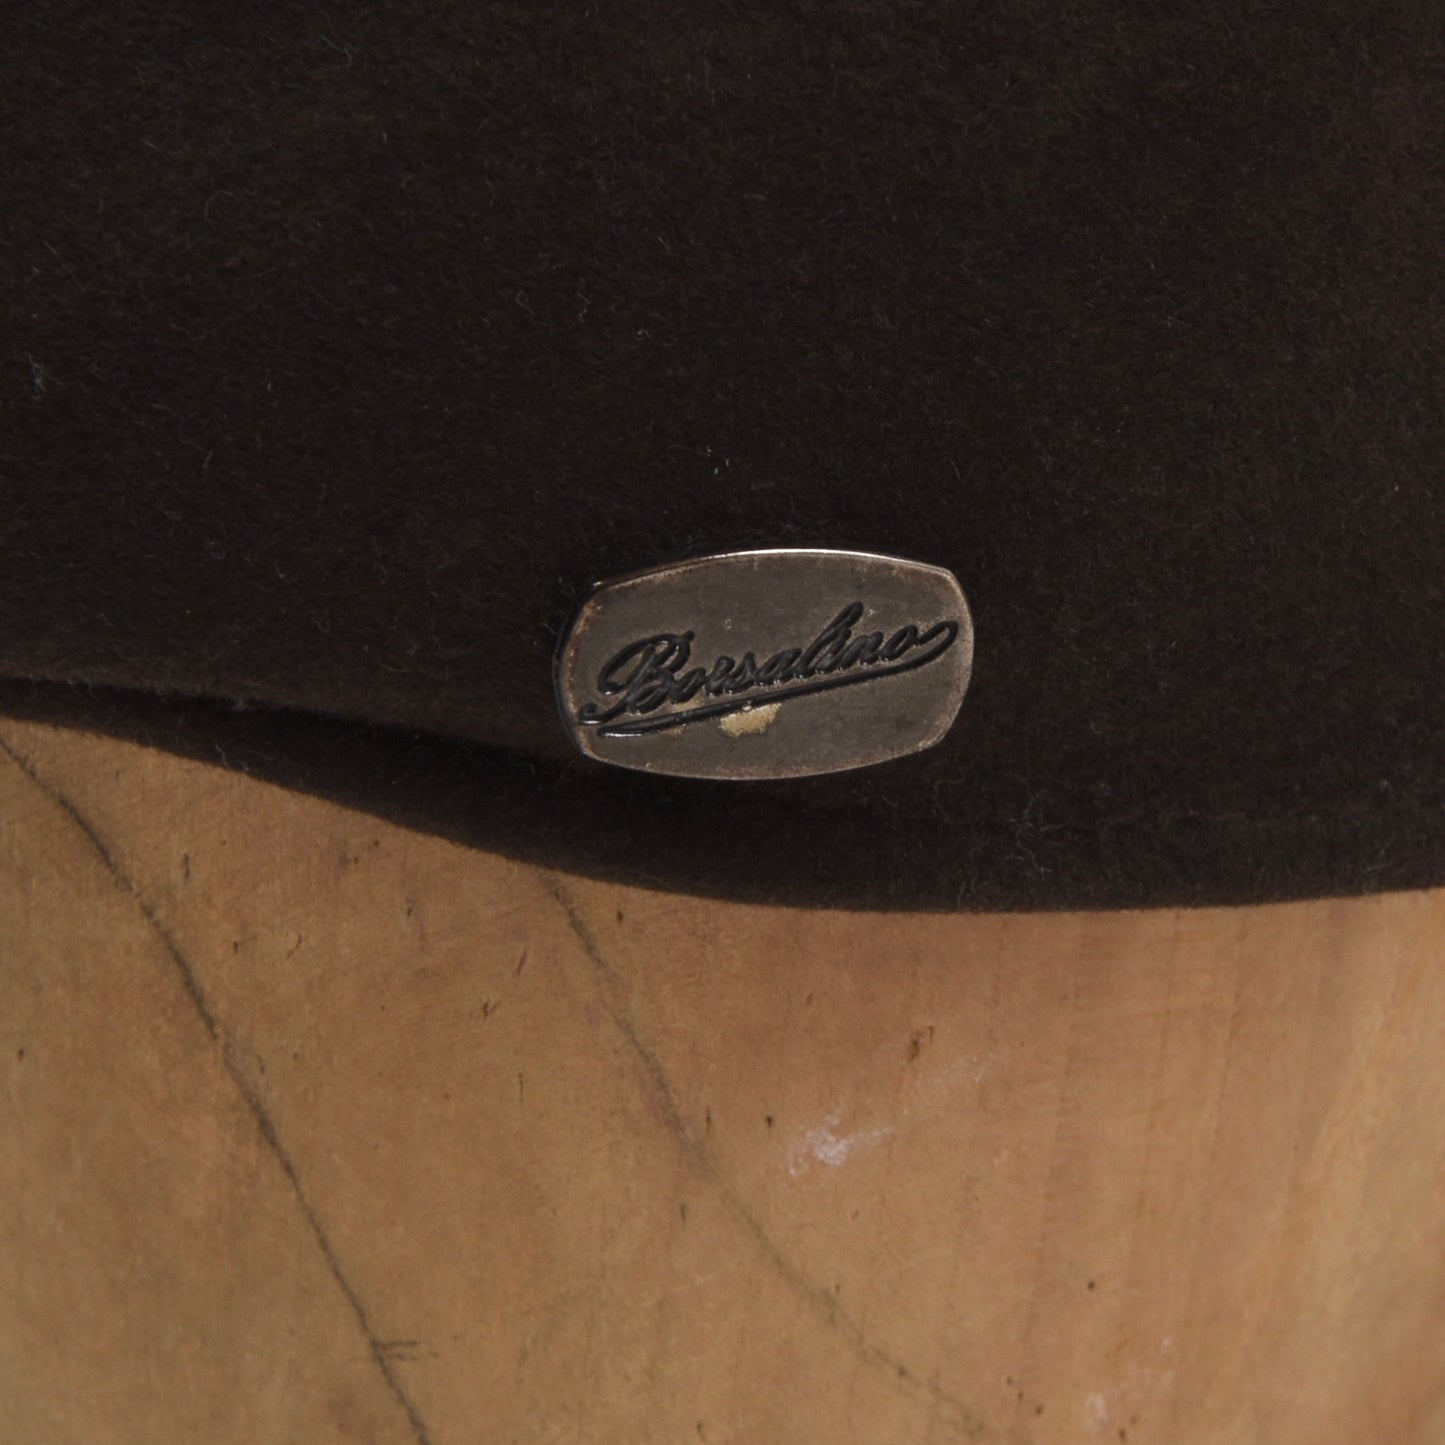 Borsalino Rainproof Line Fur Felt Cap/Hat Size 59 - Brown